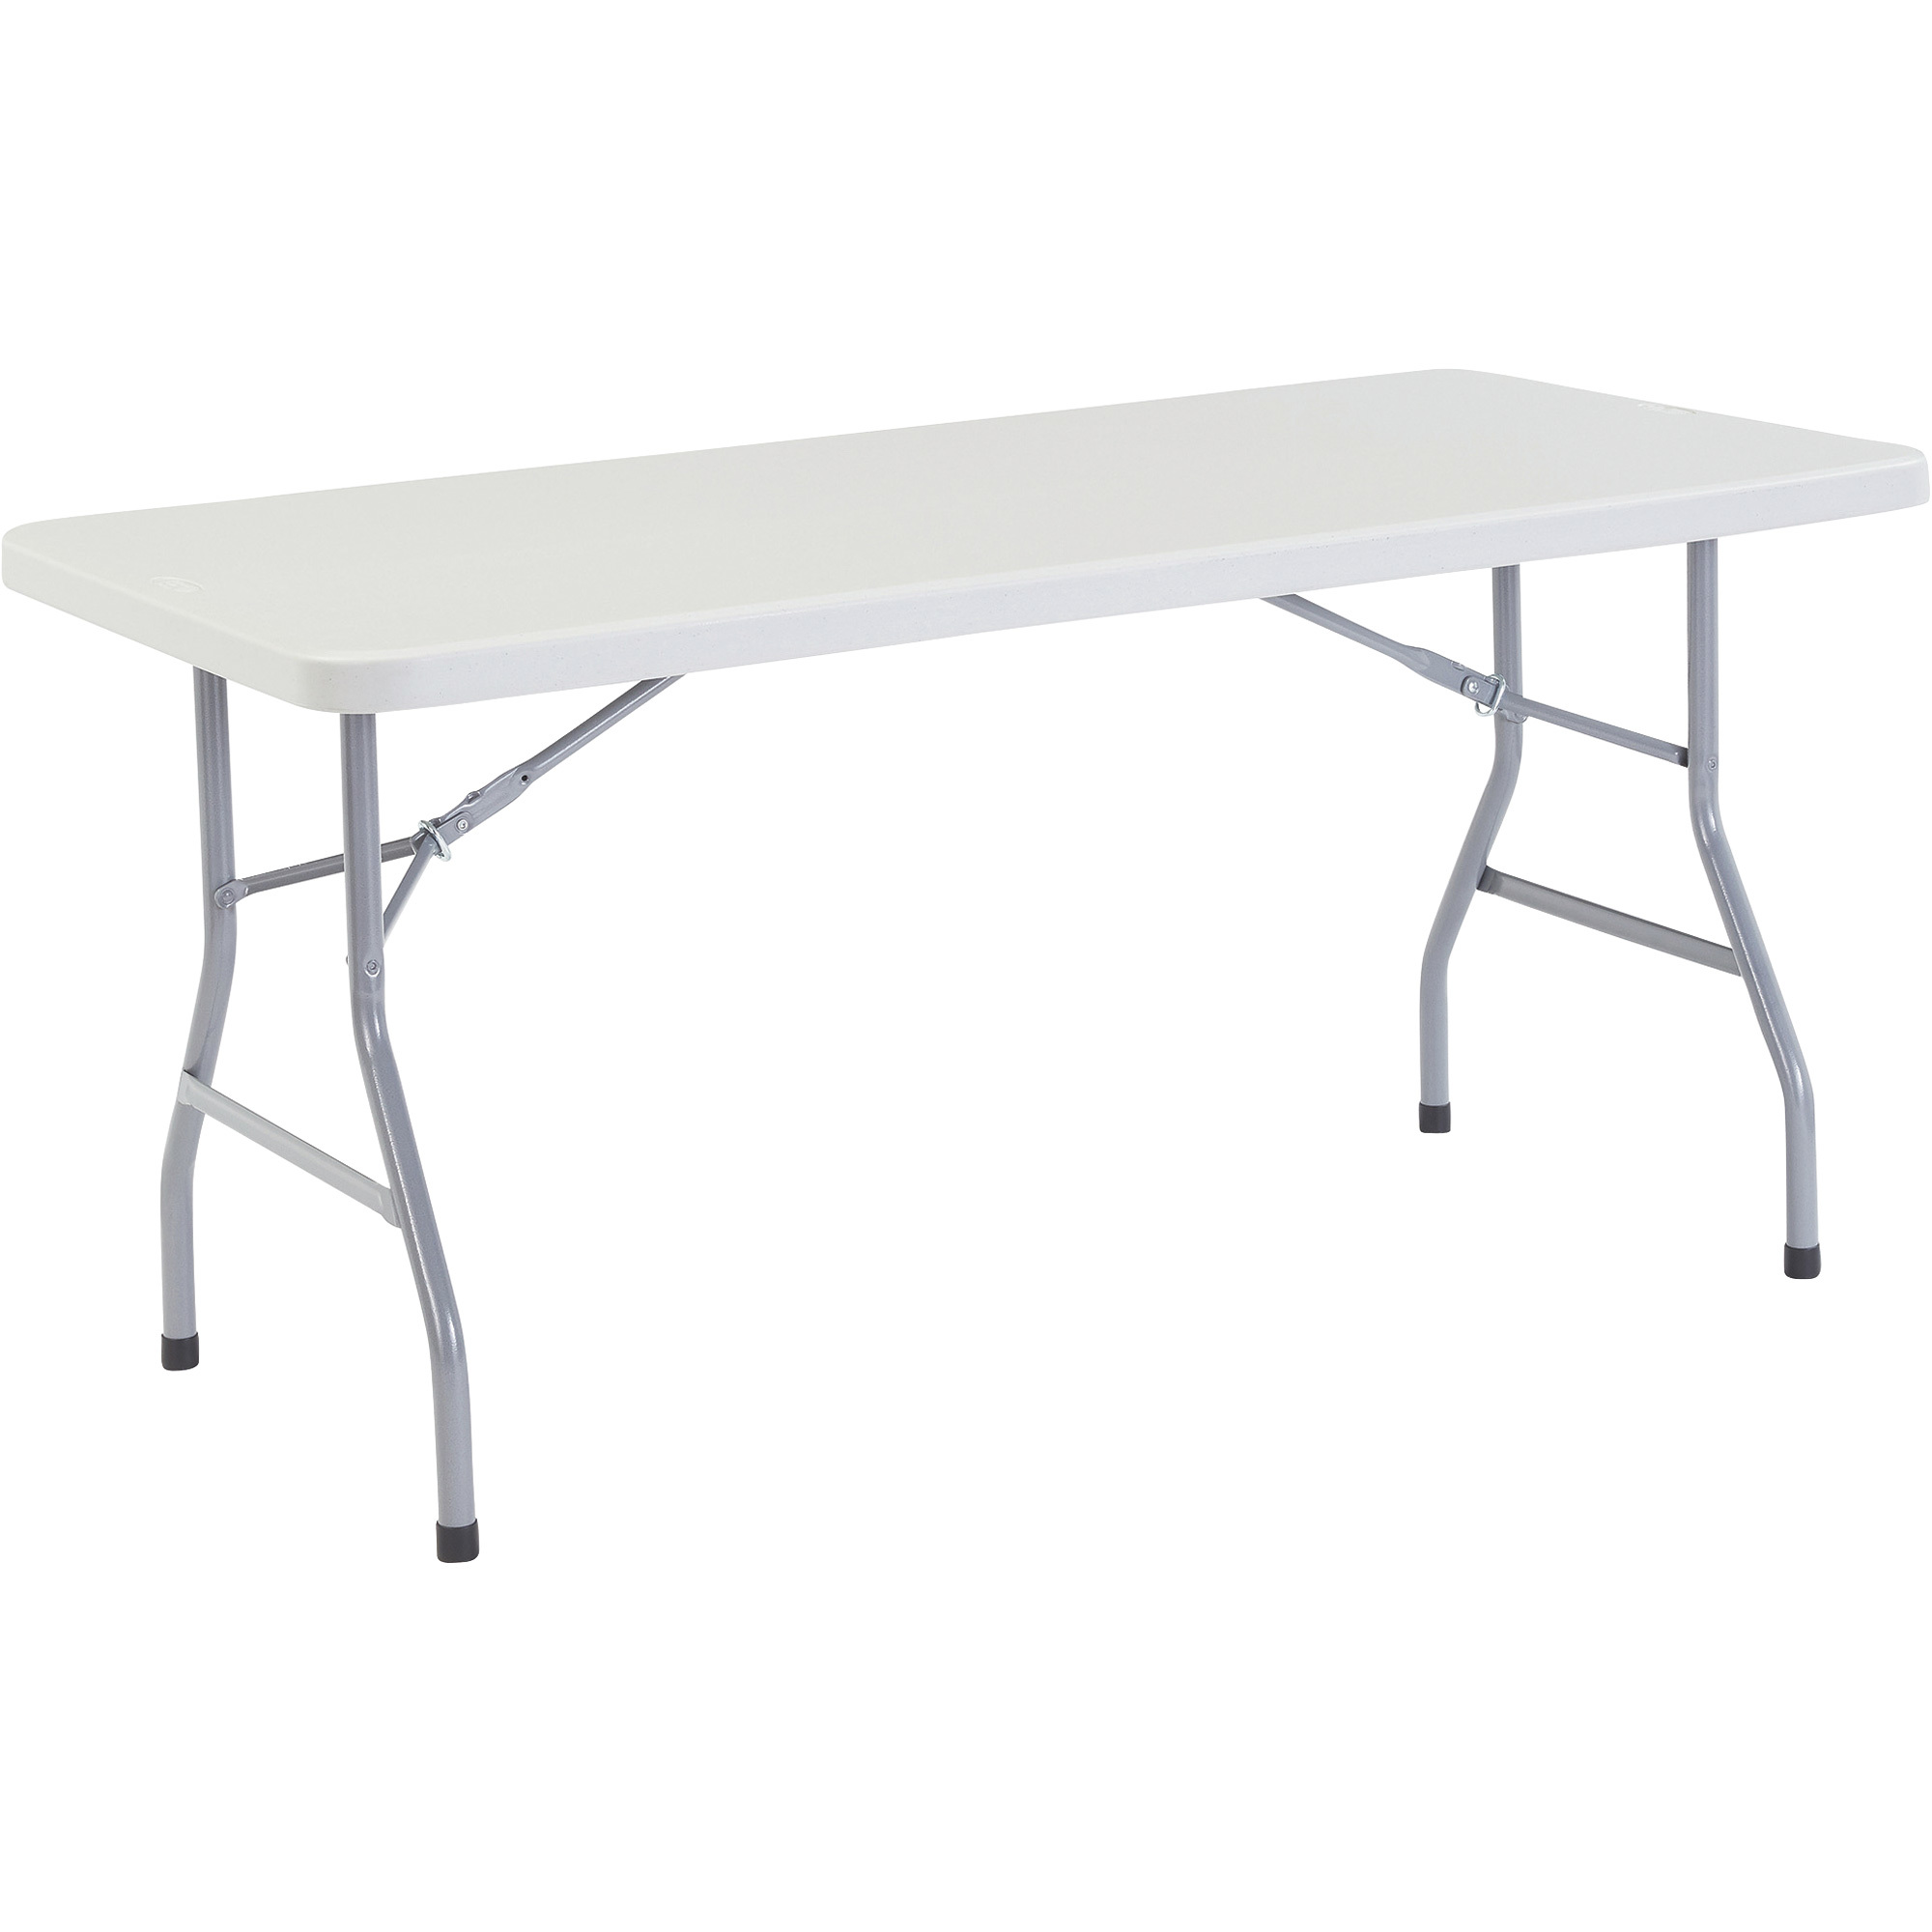 National Public Seating Plastic Folding Table â 30Inch W x 60Inch L, Model BT3060